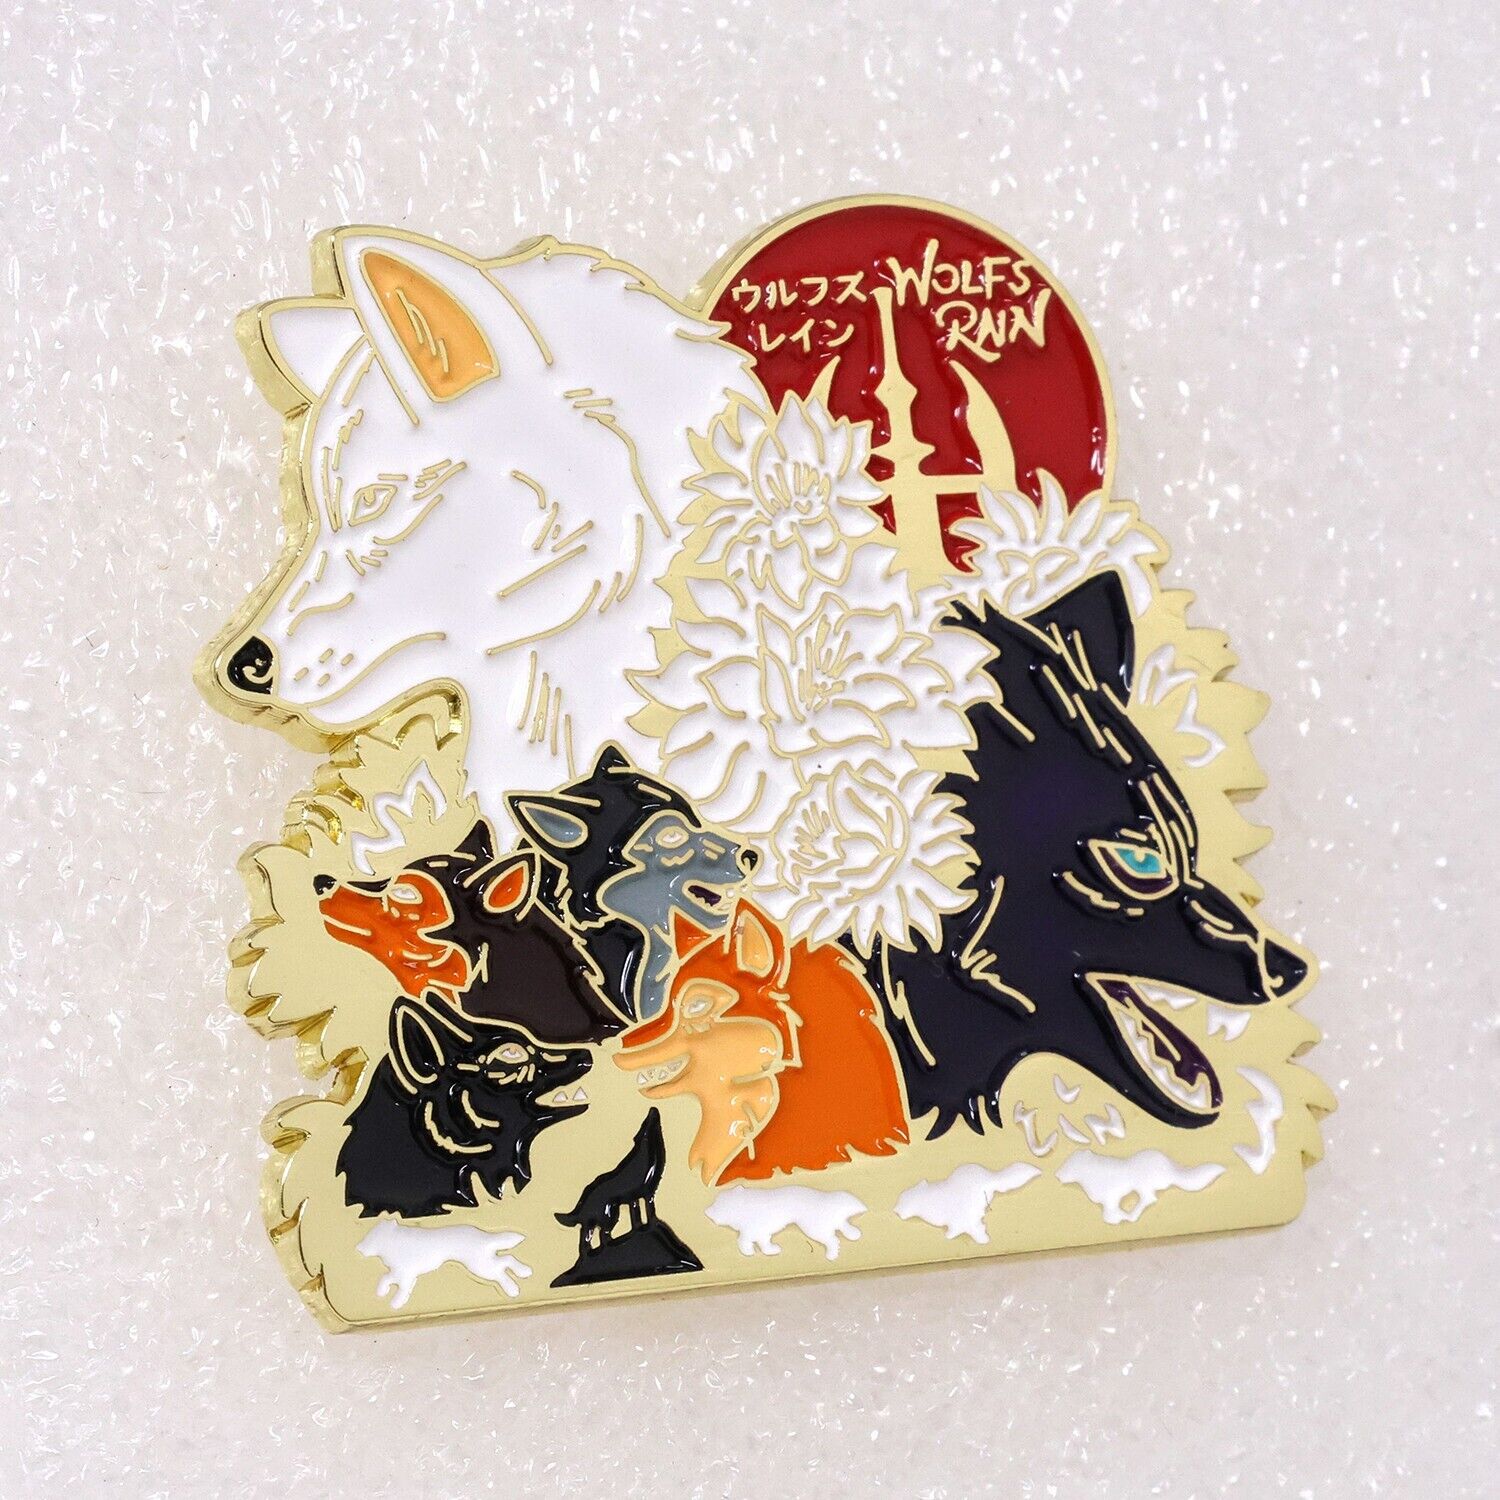 Wolf\'s Rain Golden Enamel Pin Badge Brooch Collectible Anime Figure